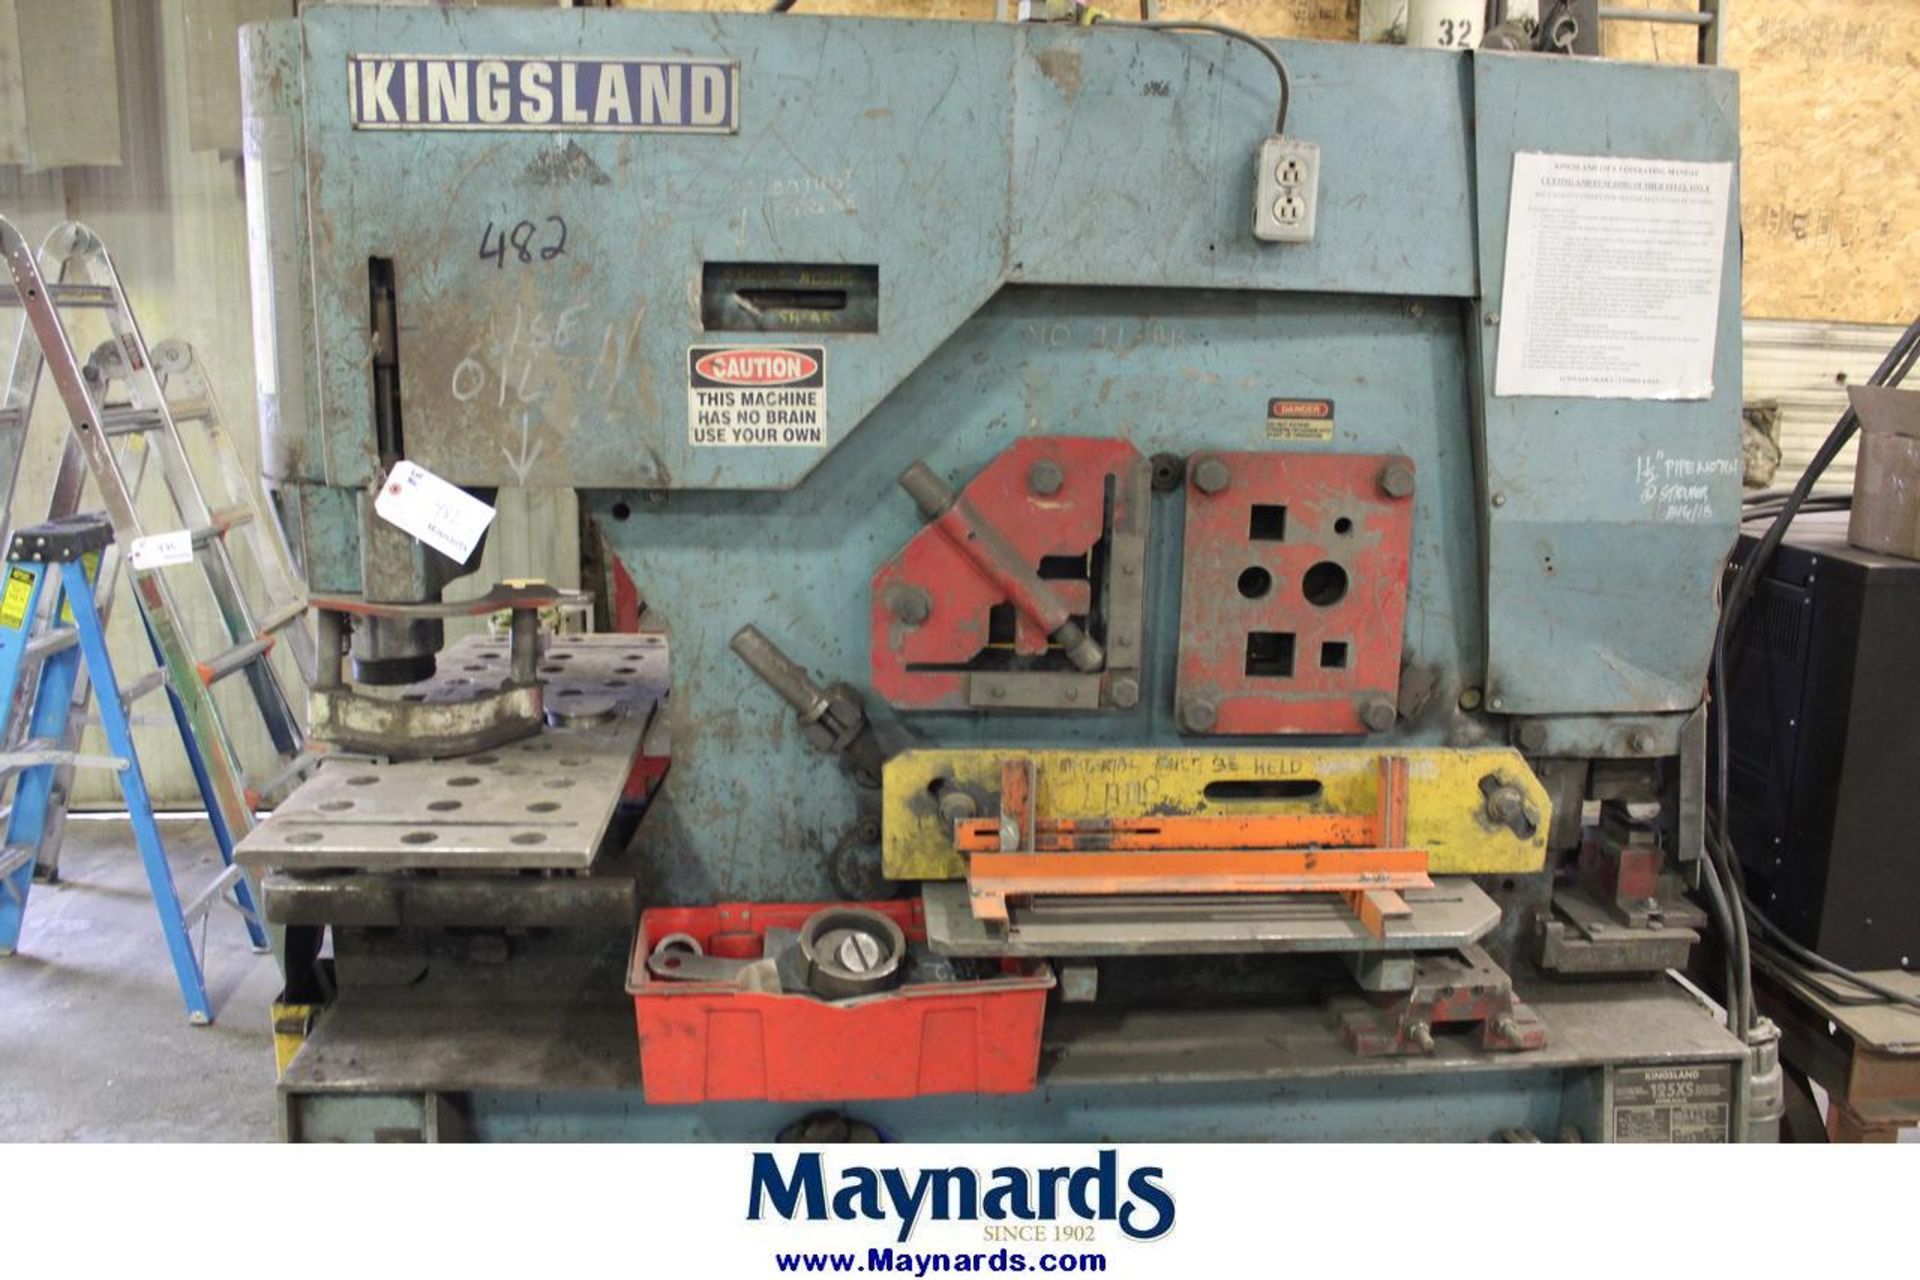 Kingsland 125XS iron worker - Image 3 of 4